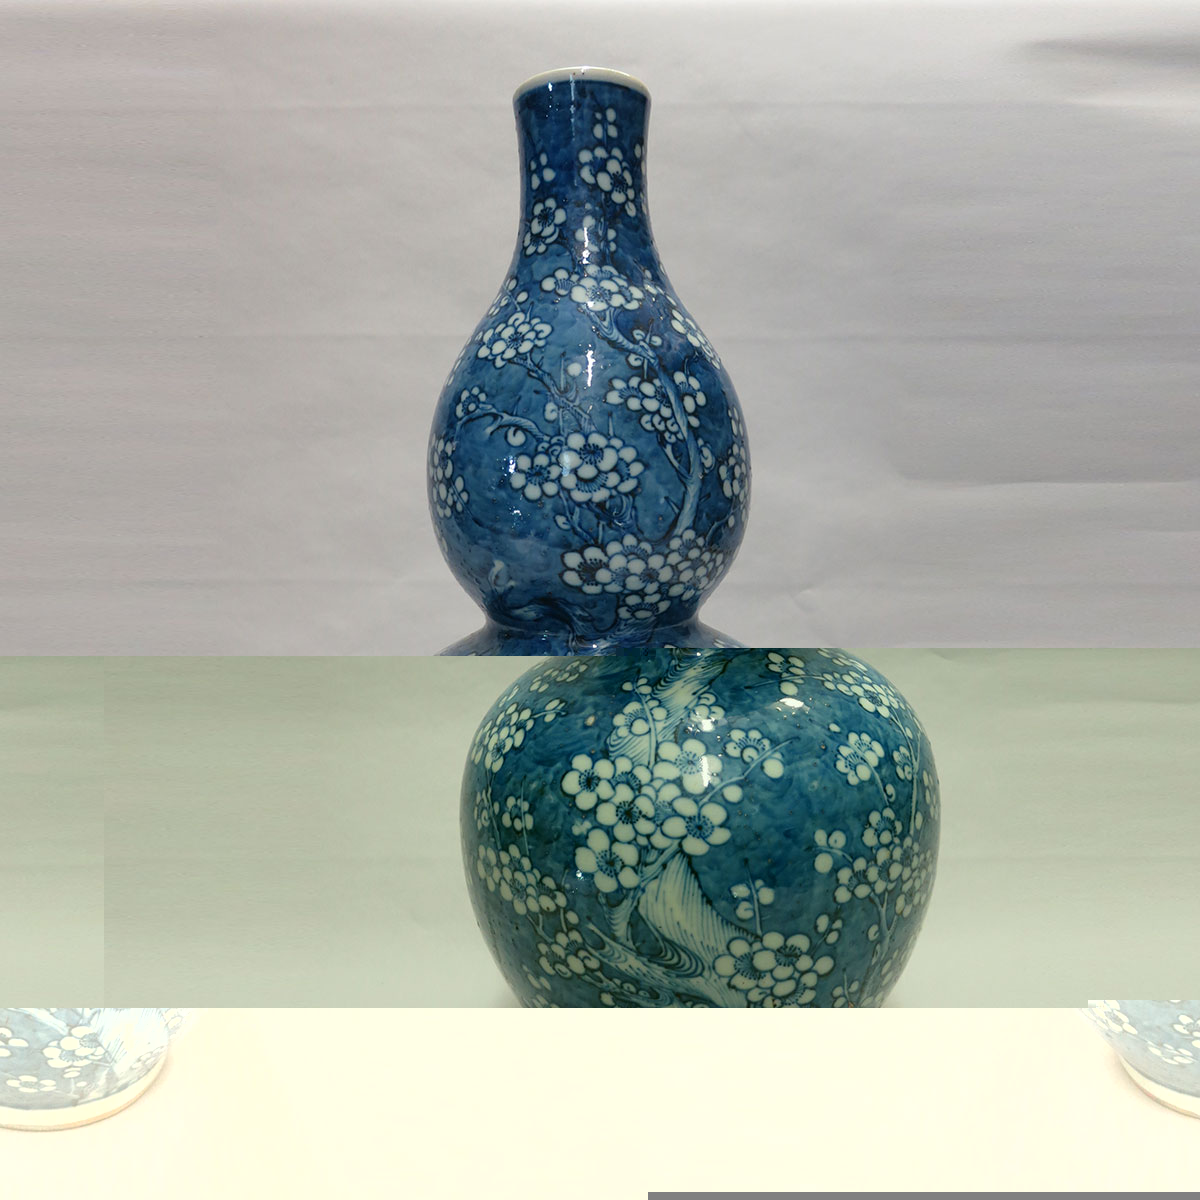 Blue and White ‘Prunus Flower’ Double Gourd Vase